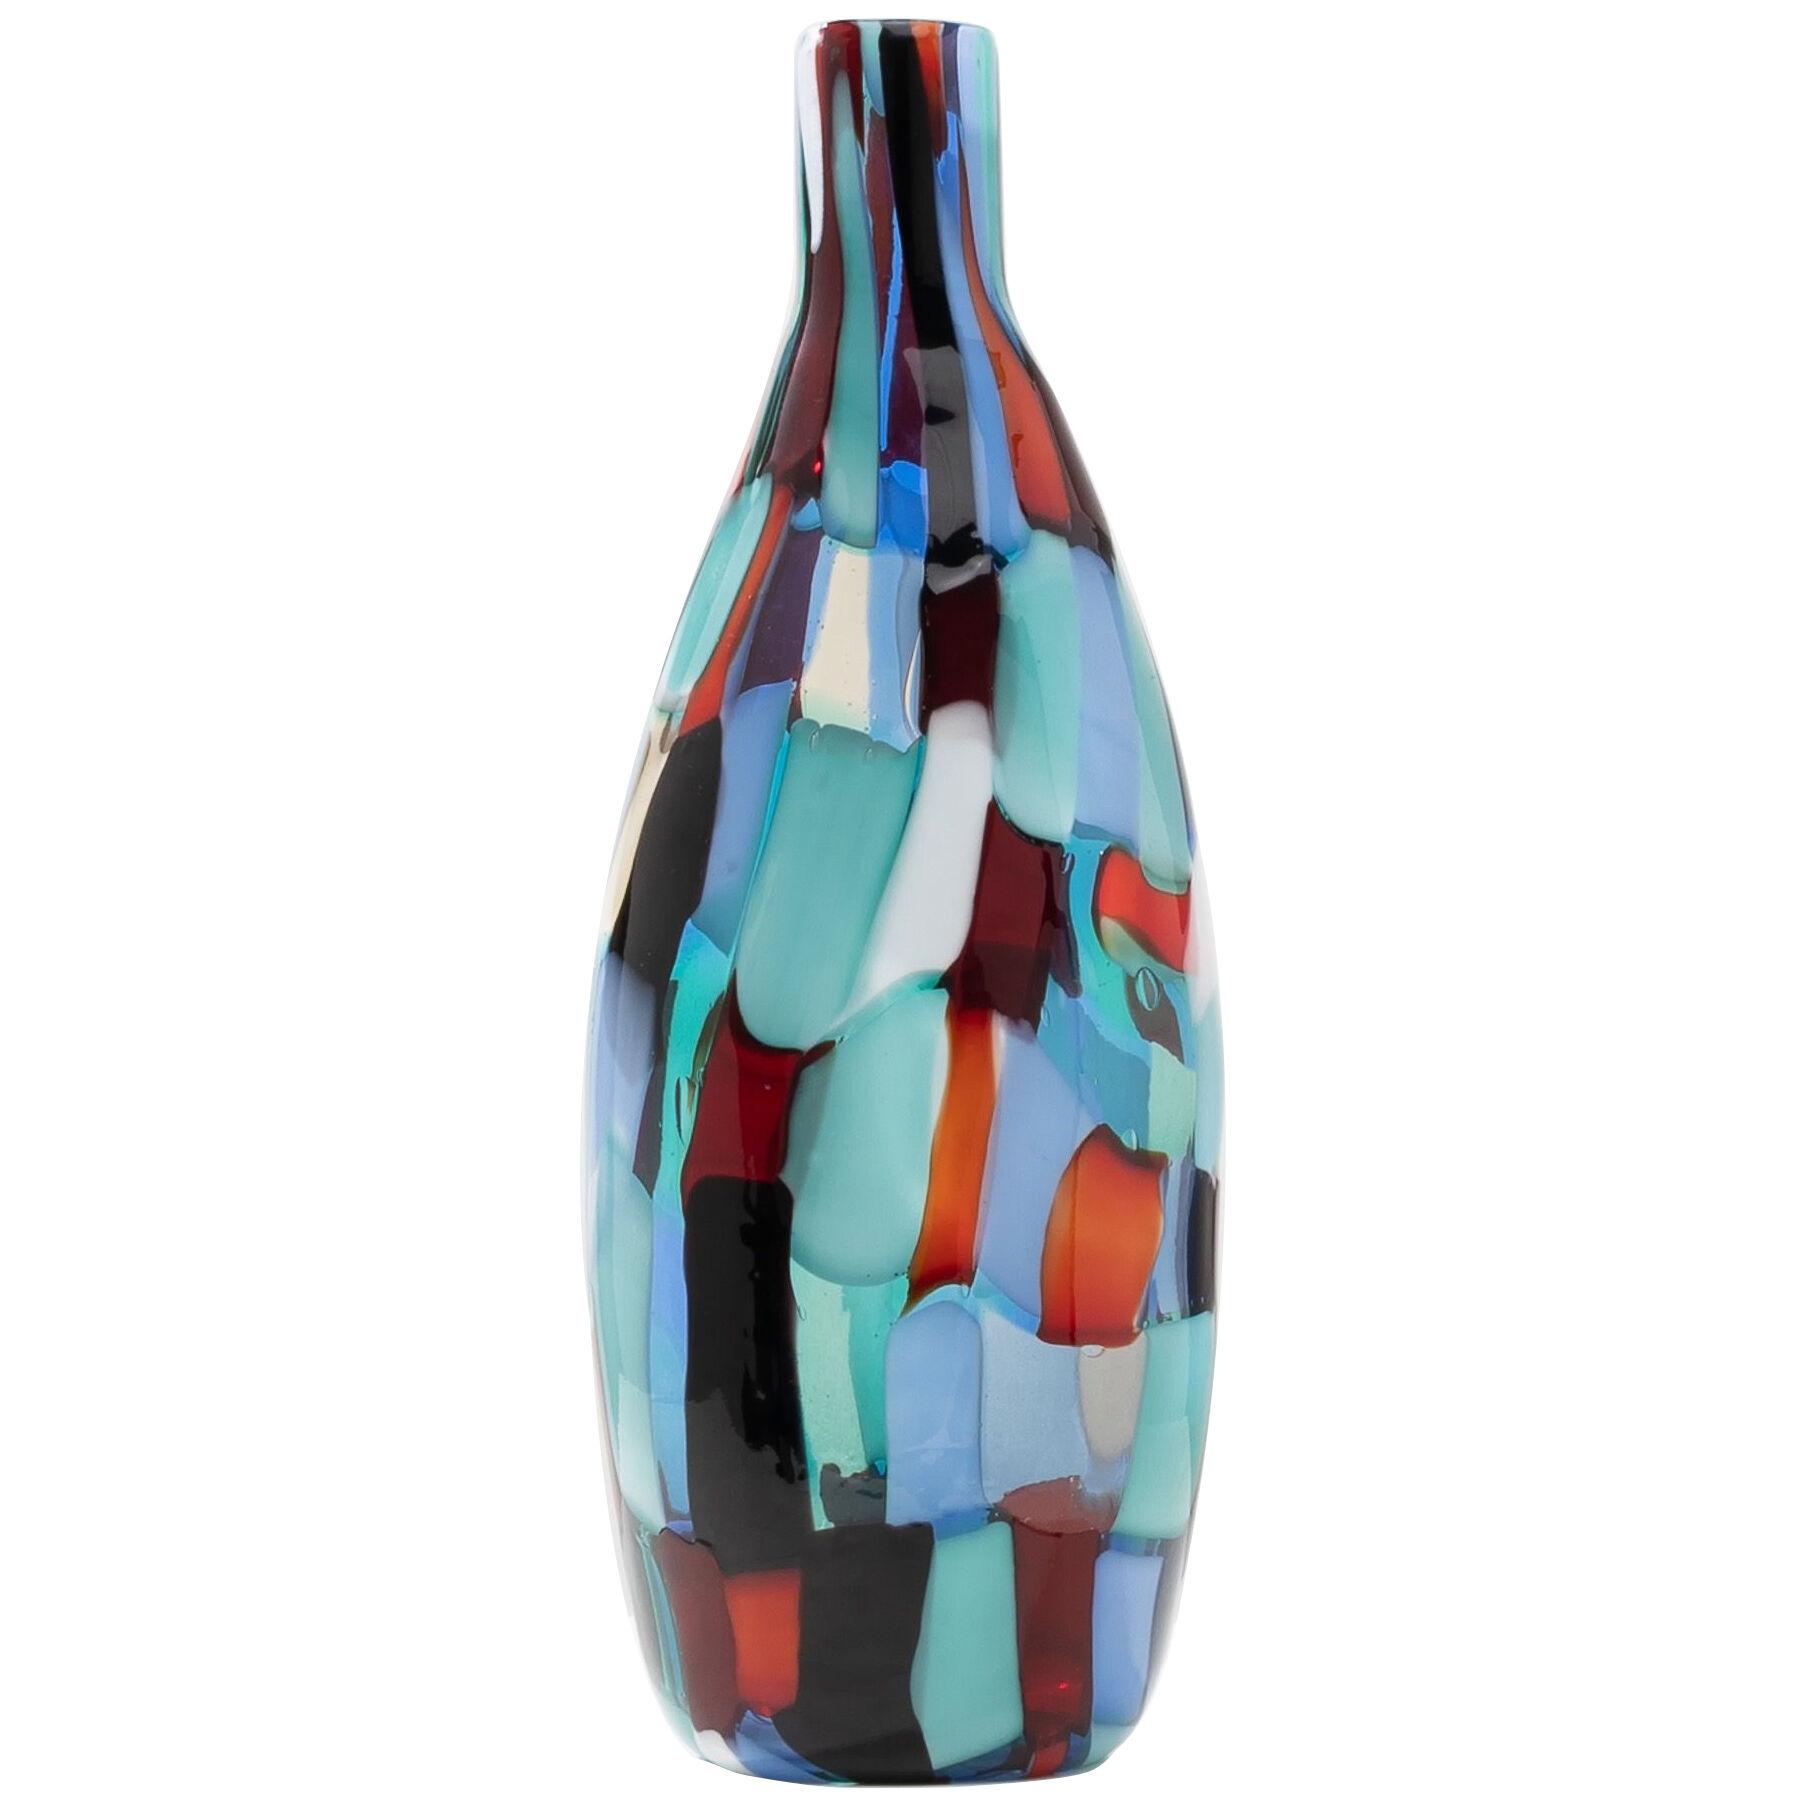 Pezzato arlechino bottle shaped vase by Fulvio Bianconi – model 4319 – Venini 